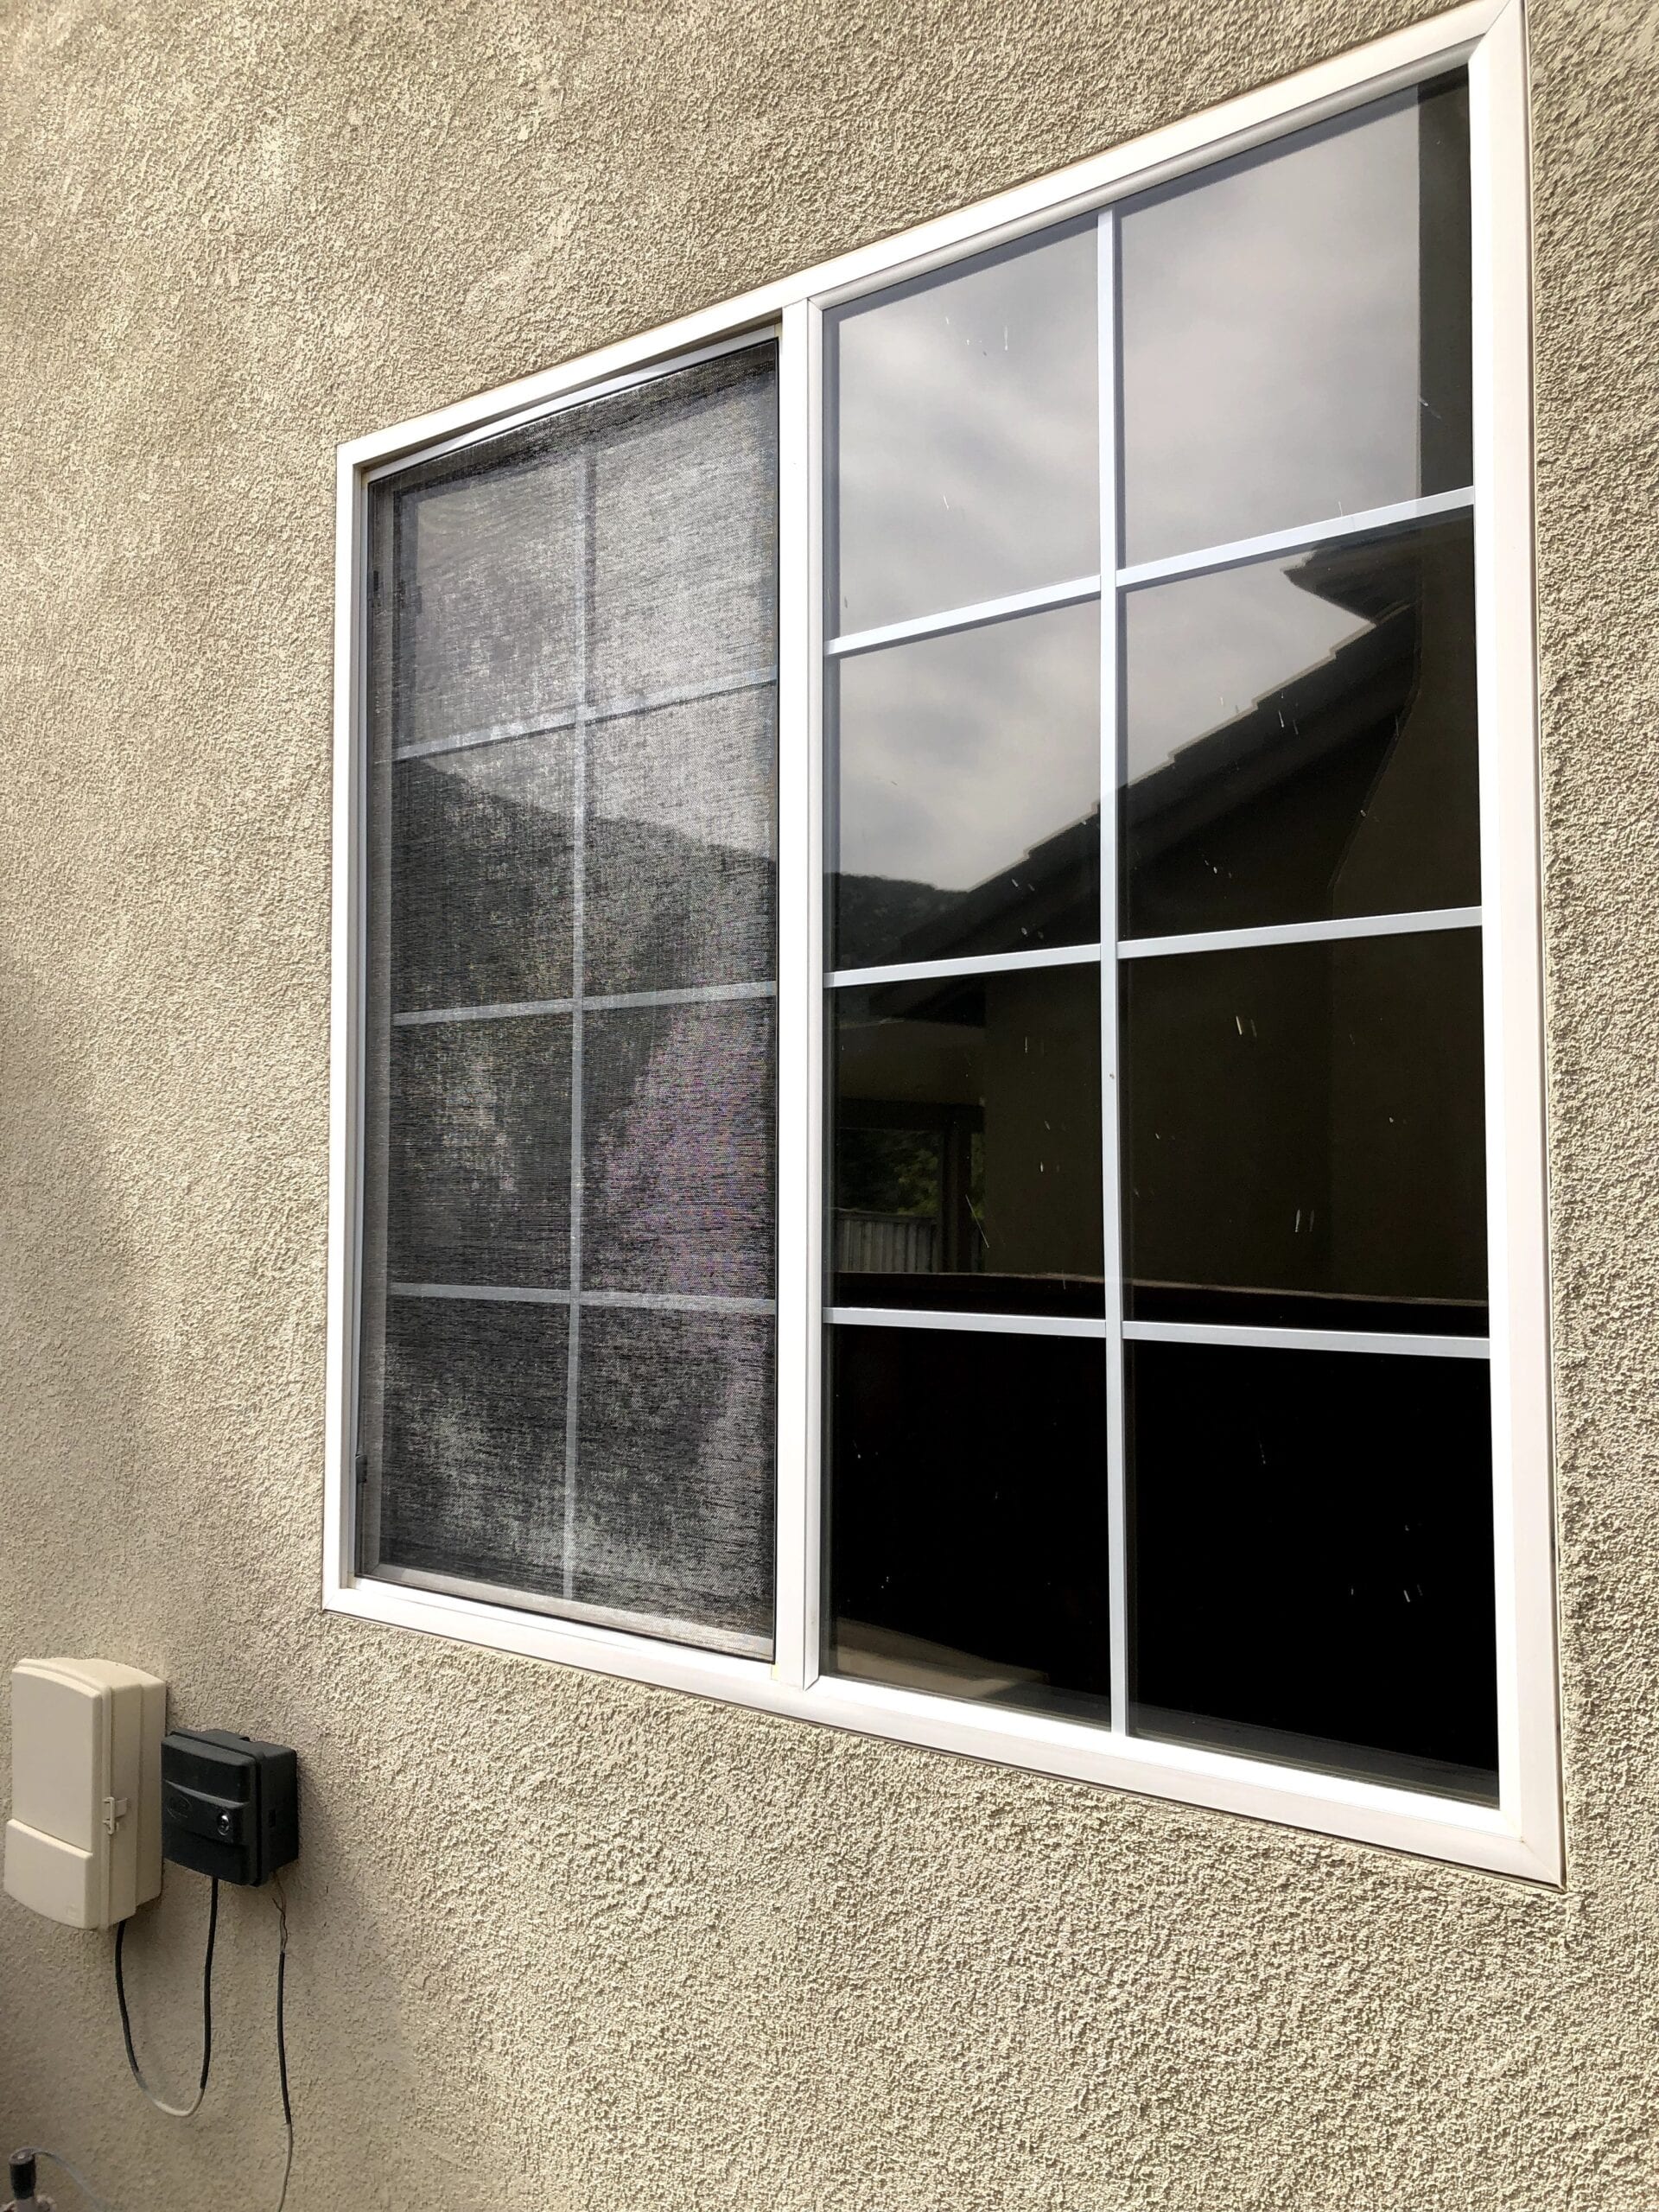 Dual Reflective Window film installation on a home in murrieta ca | Home window tinting murrieta 